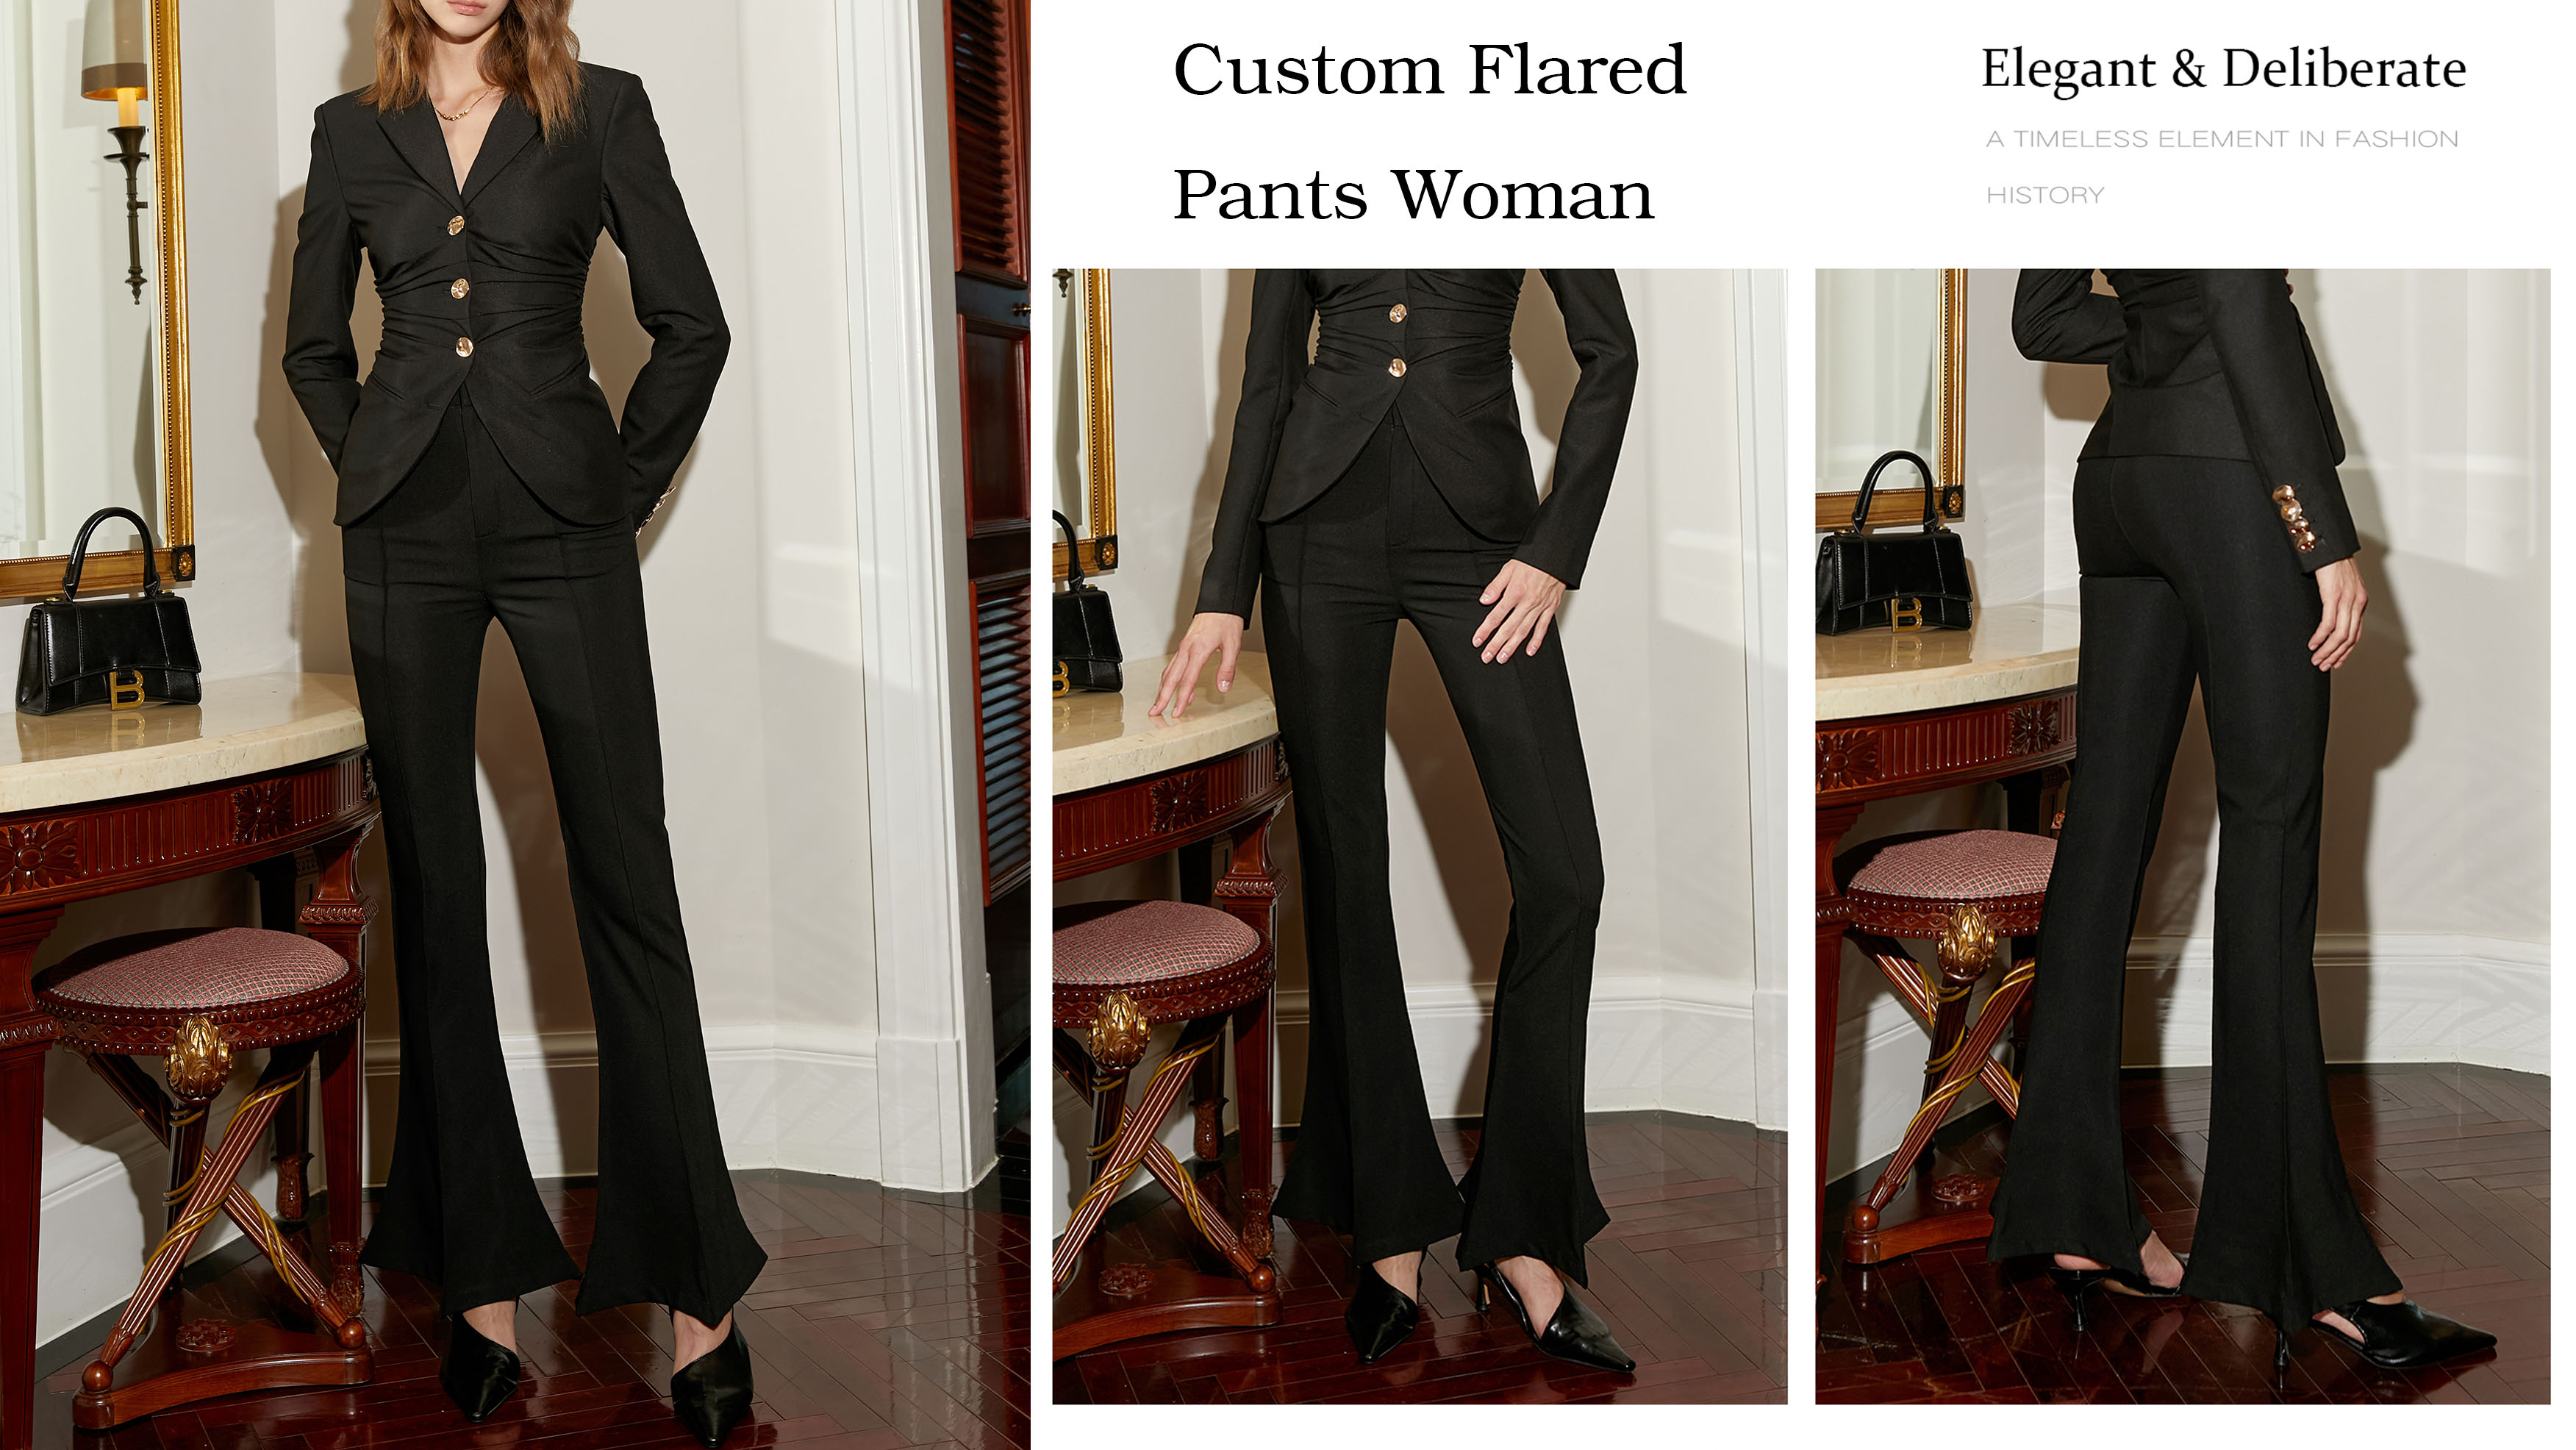 Best Custom Flared Pants Woman Company - Auschalink